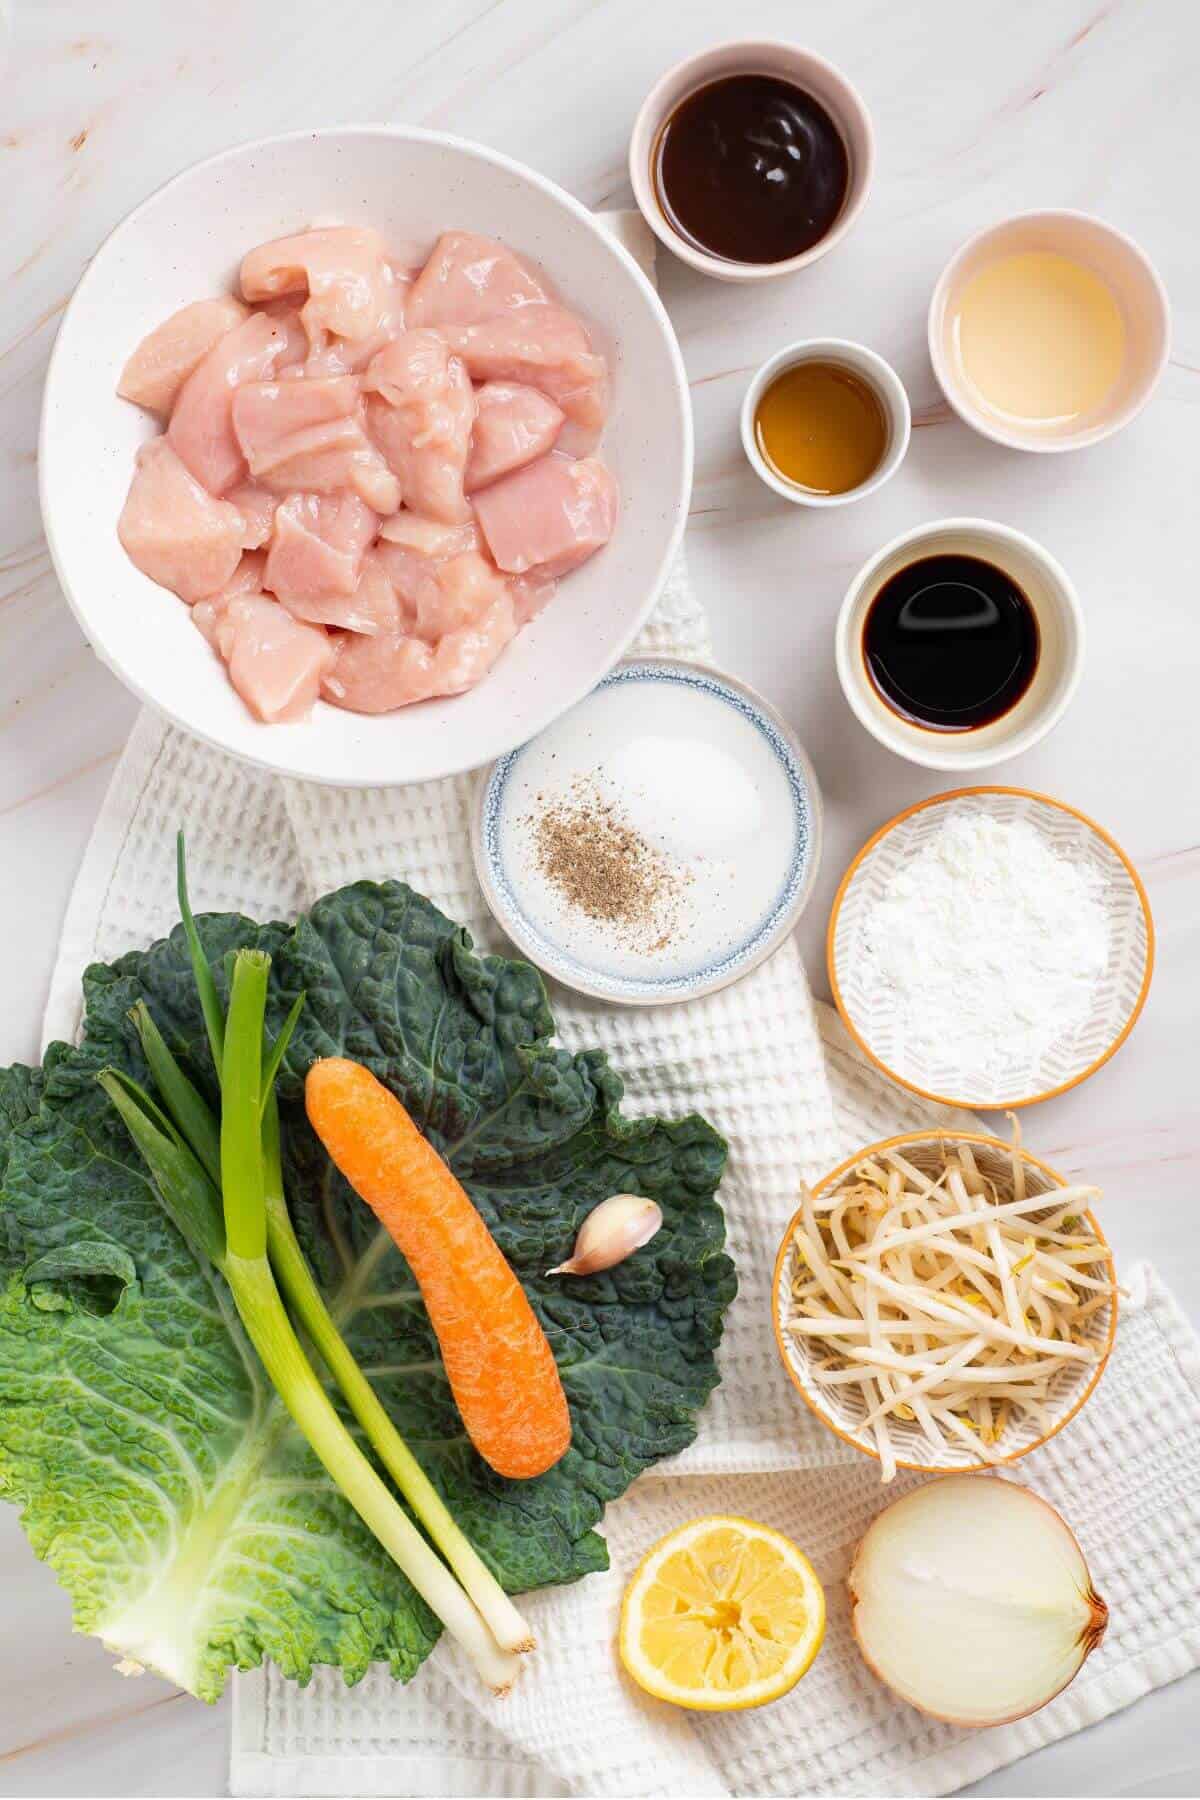 Ingredients for the chicken chop suey recipe.